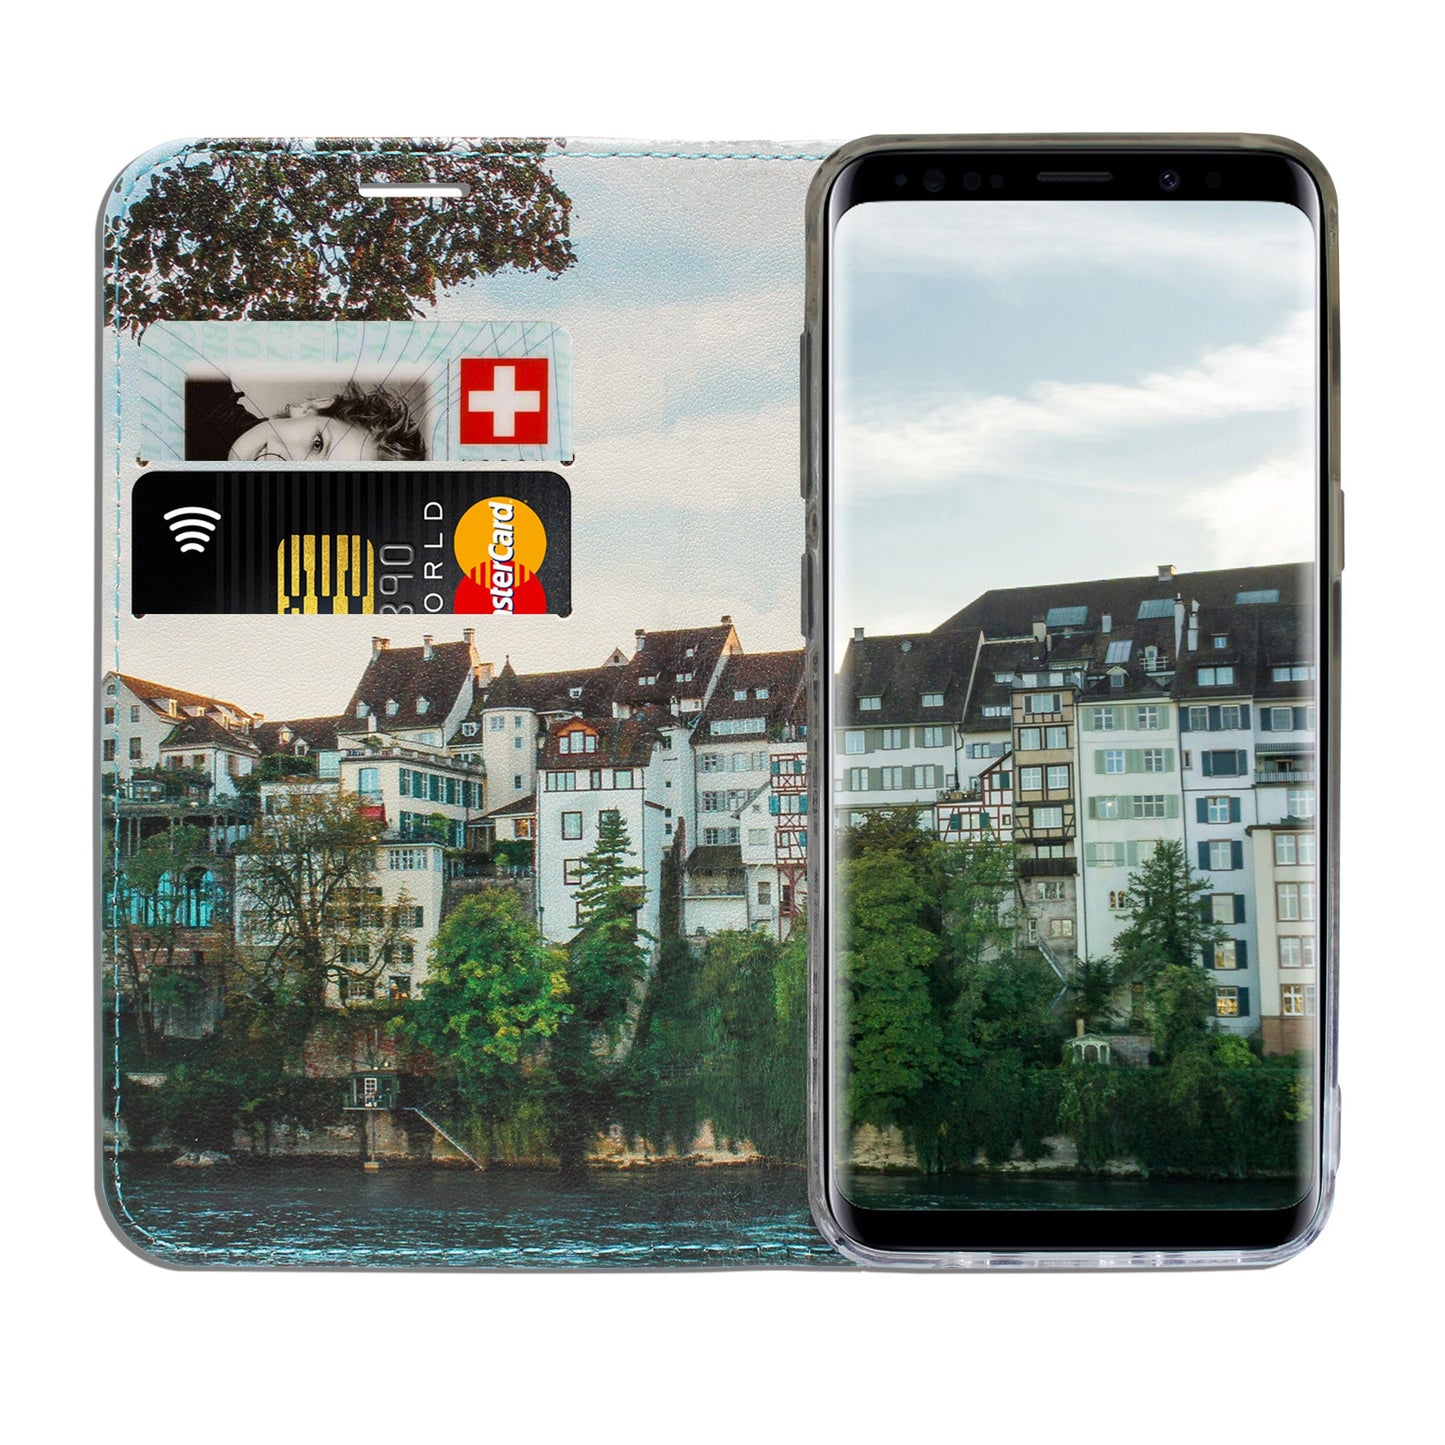 Basel City Rhein Panorama Case for Samsung Galaxy S7